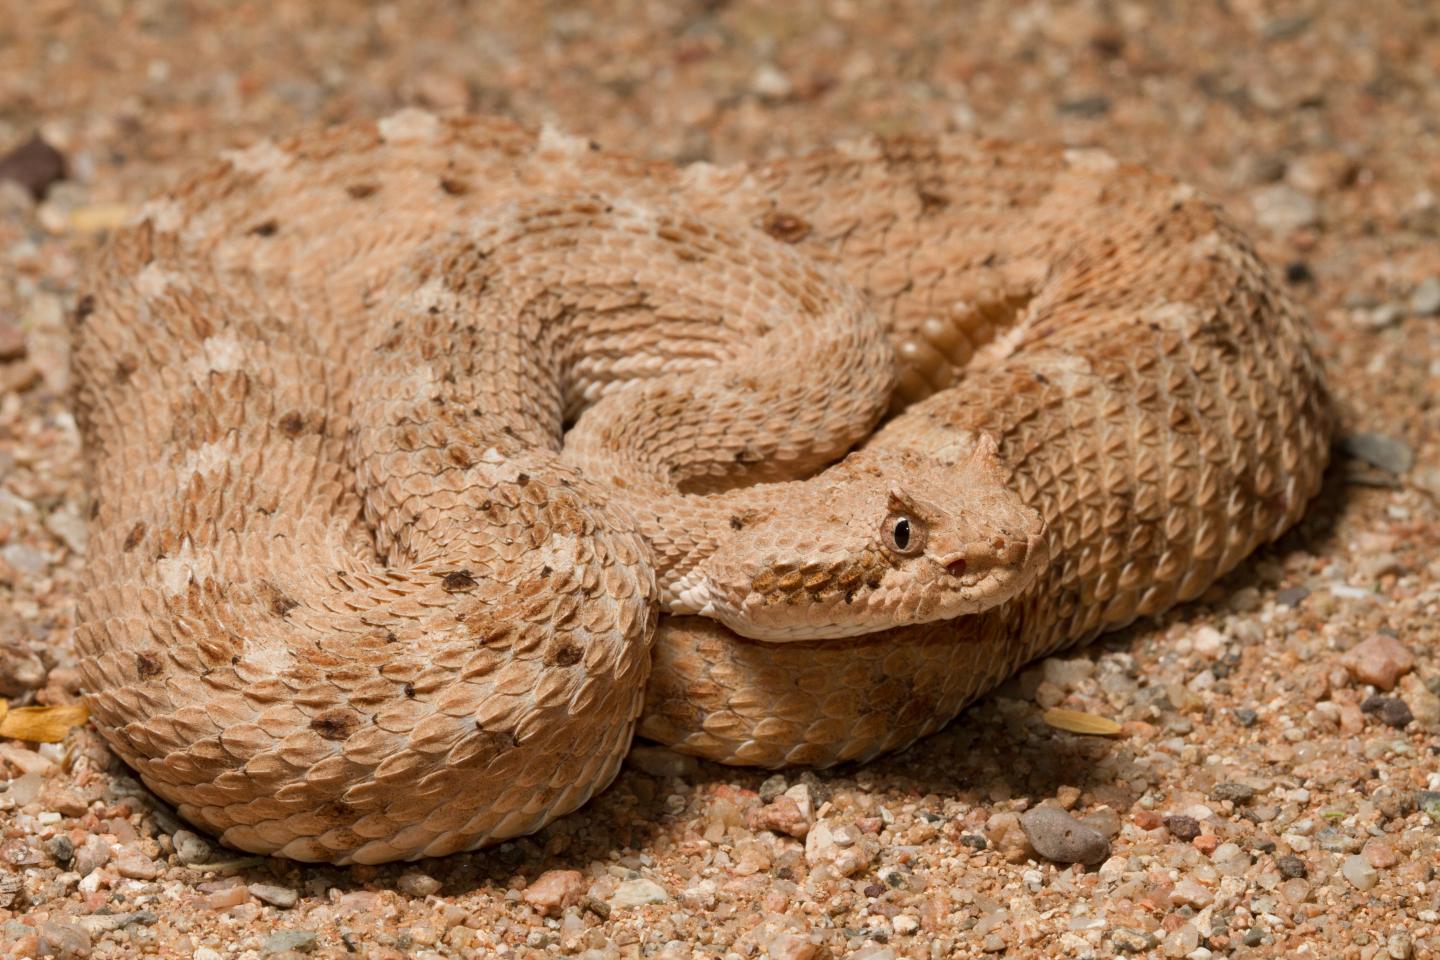 The sidewinder rattlesnake